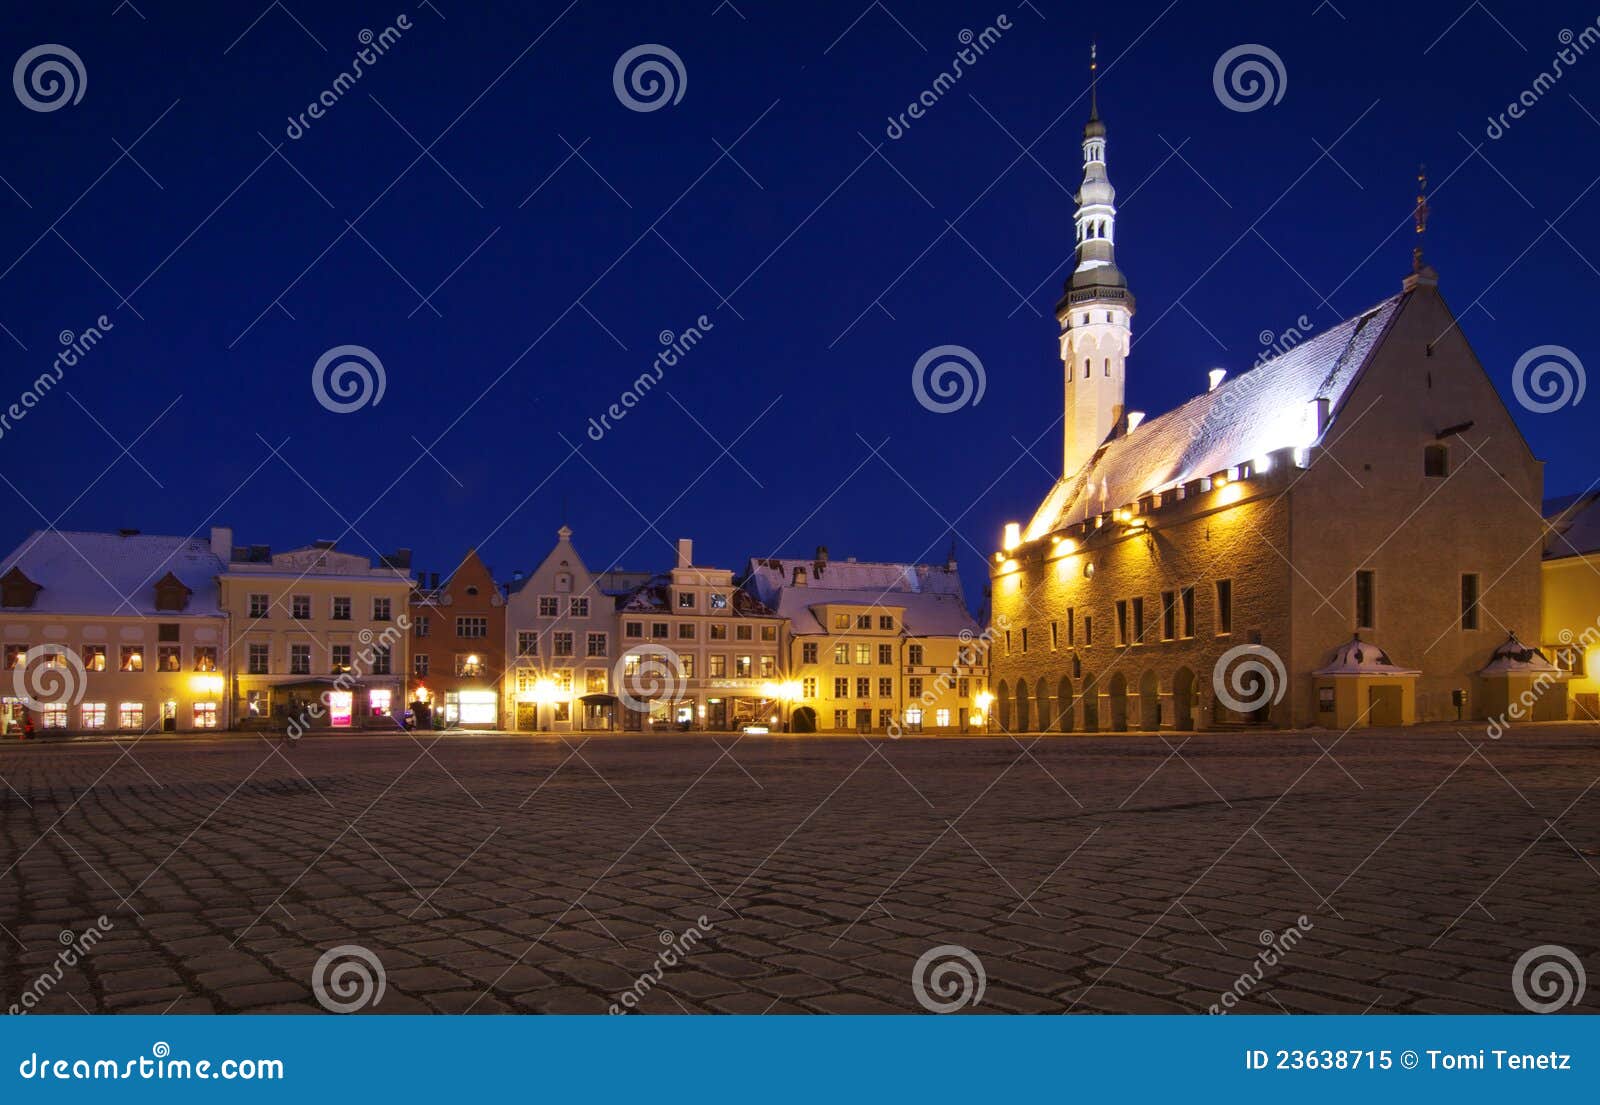 estonia: tallinn town hall square